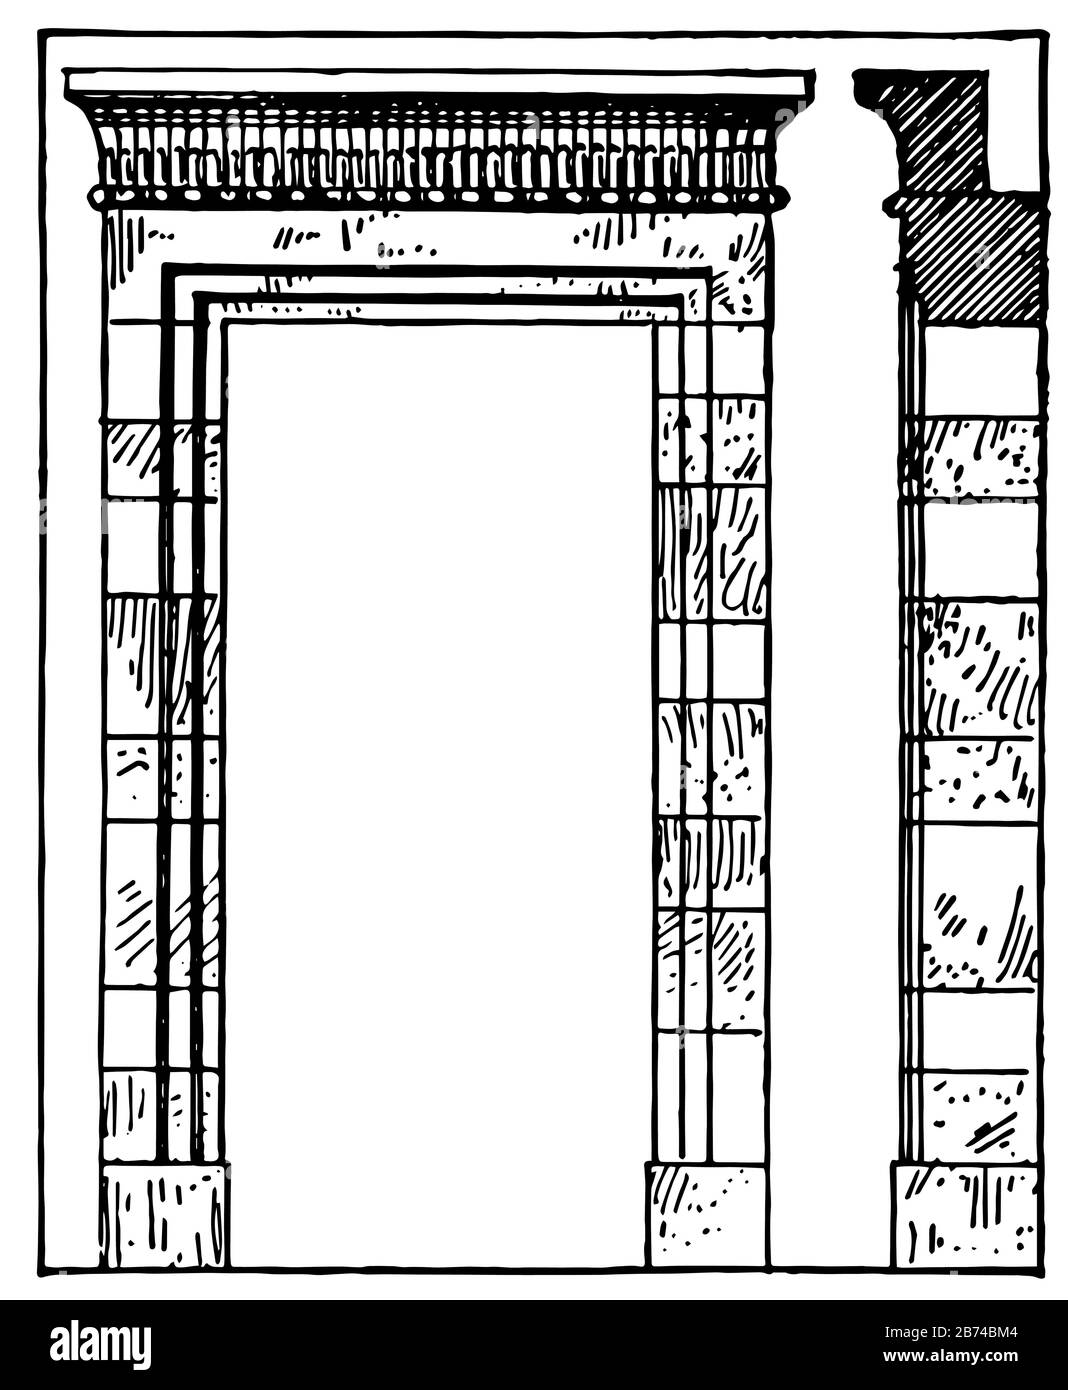 Arquitectura persa Imágenes recortadas de stock - Alamy